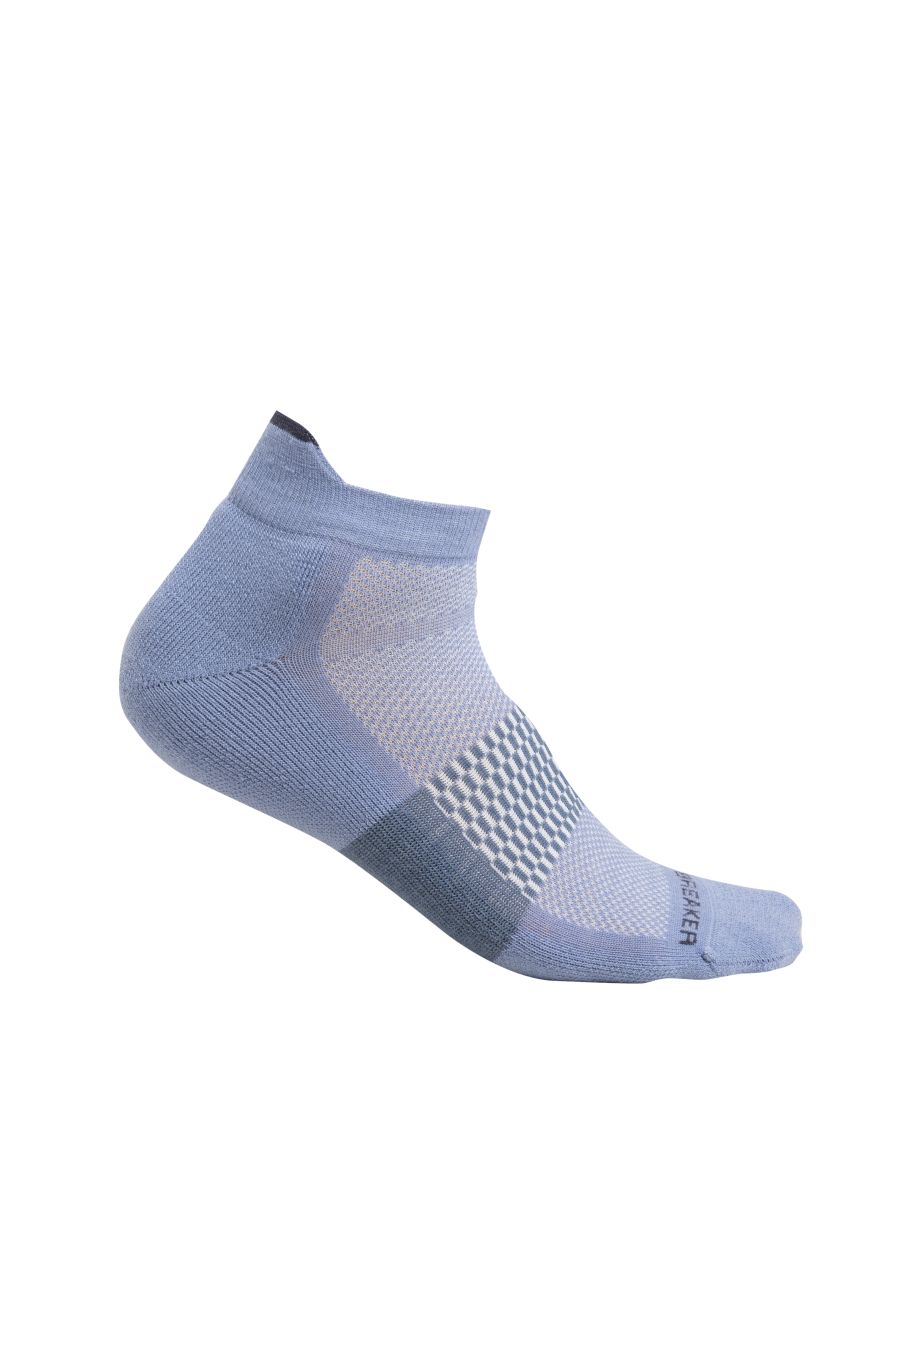 Pánské merino ponožky ICEBREAKER Mens Multisport Light Micro, Kyanite/Graphite/Dawn velikost: 44,5-46,5 (L)